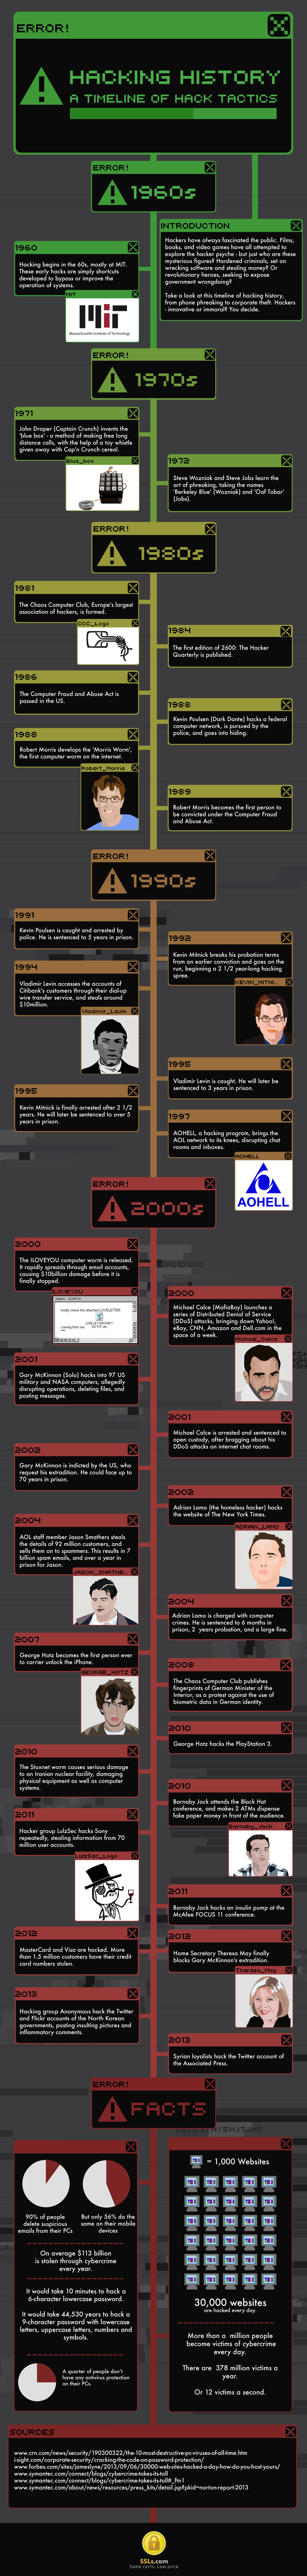 Hacking History: A Timeline of Hack Tactics